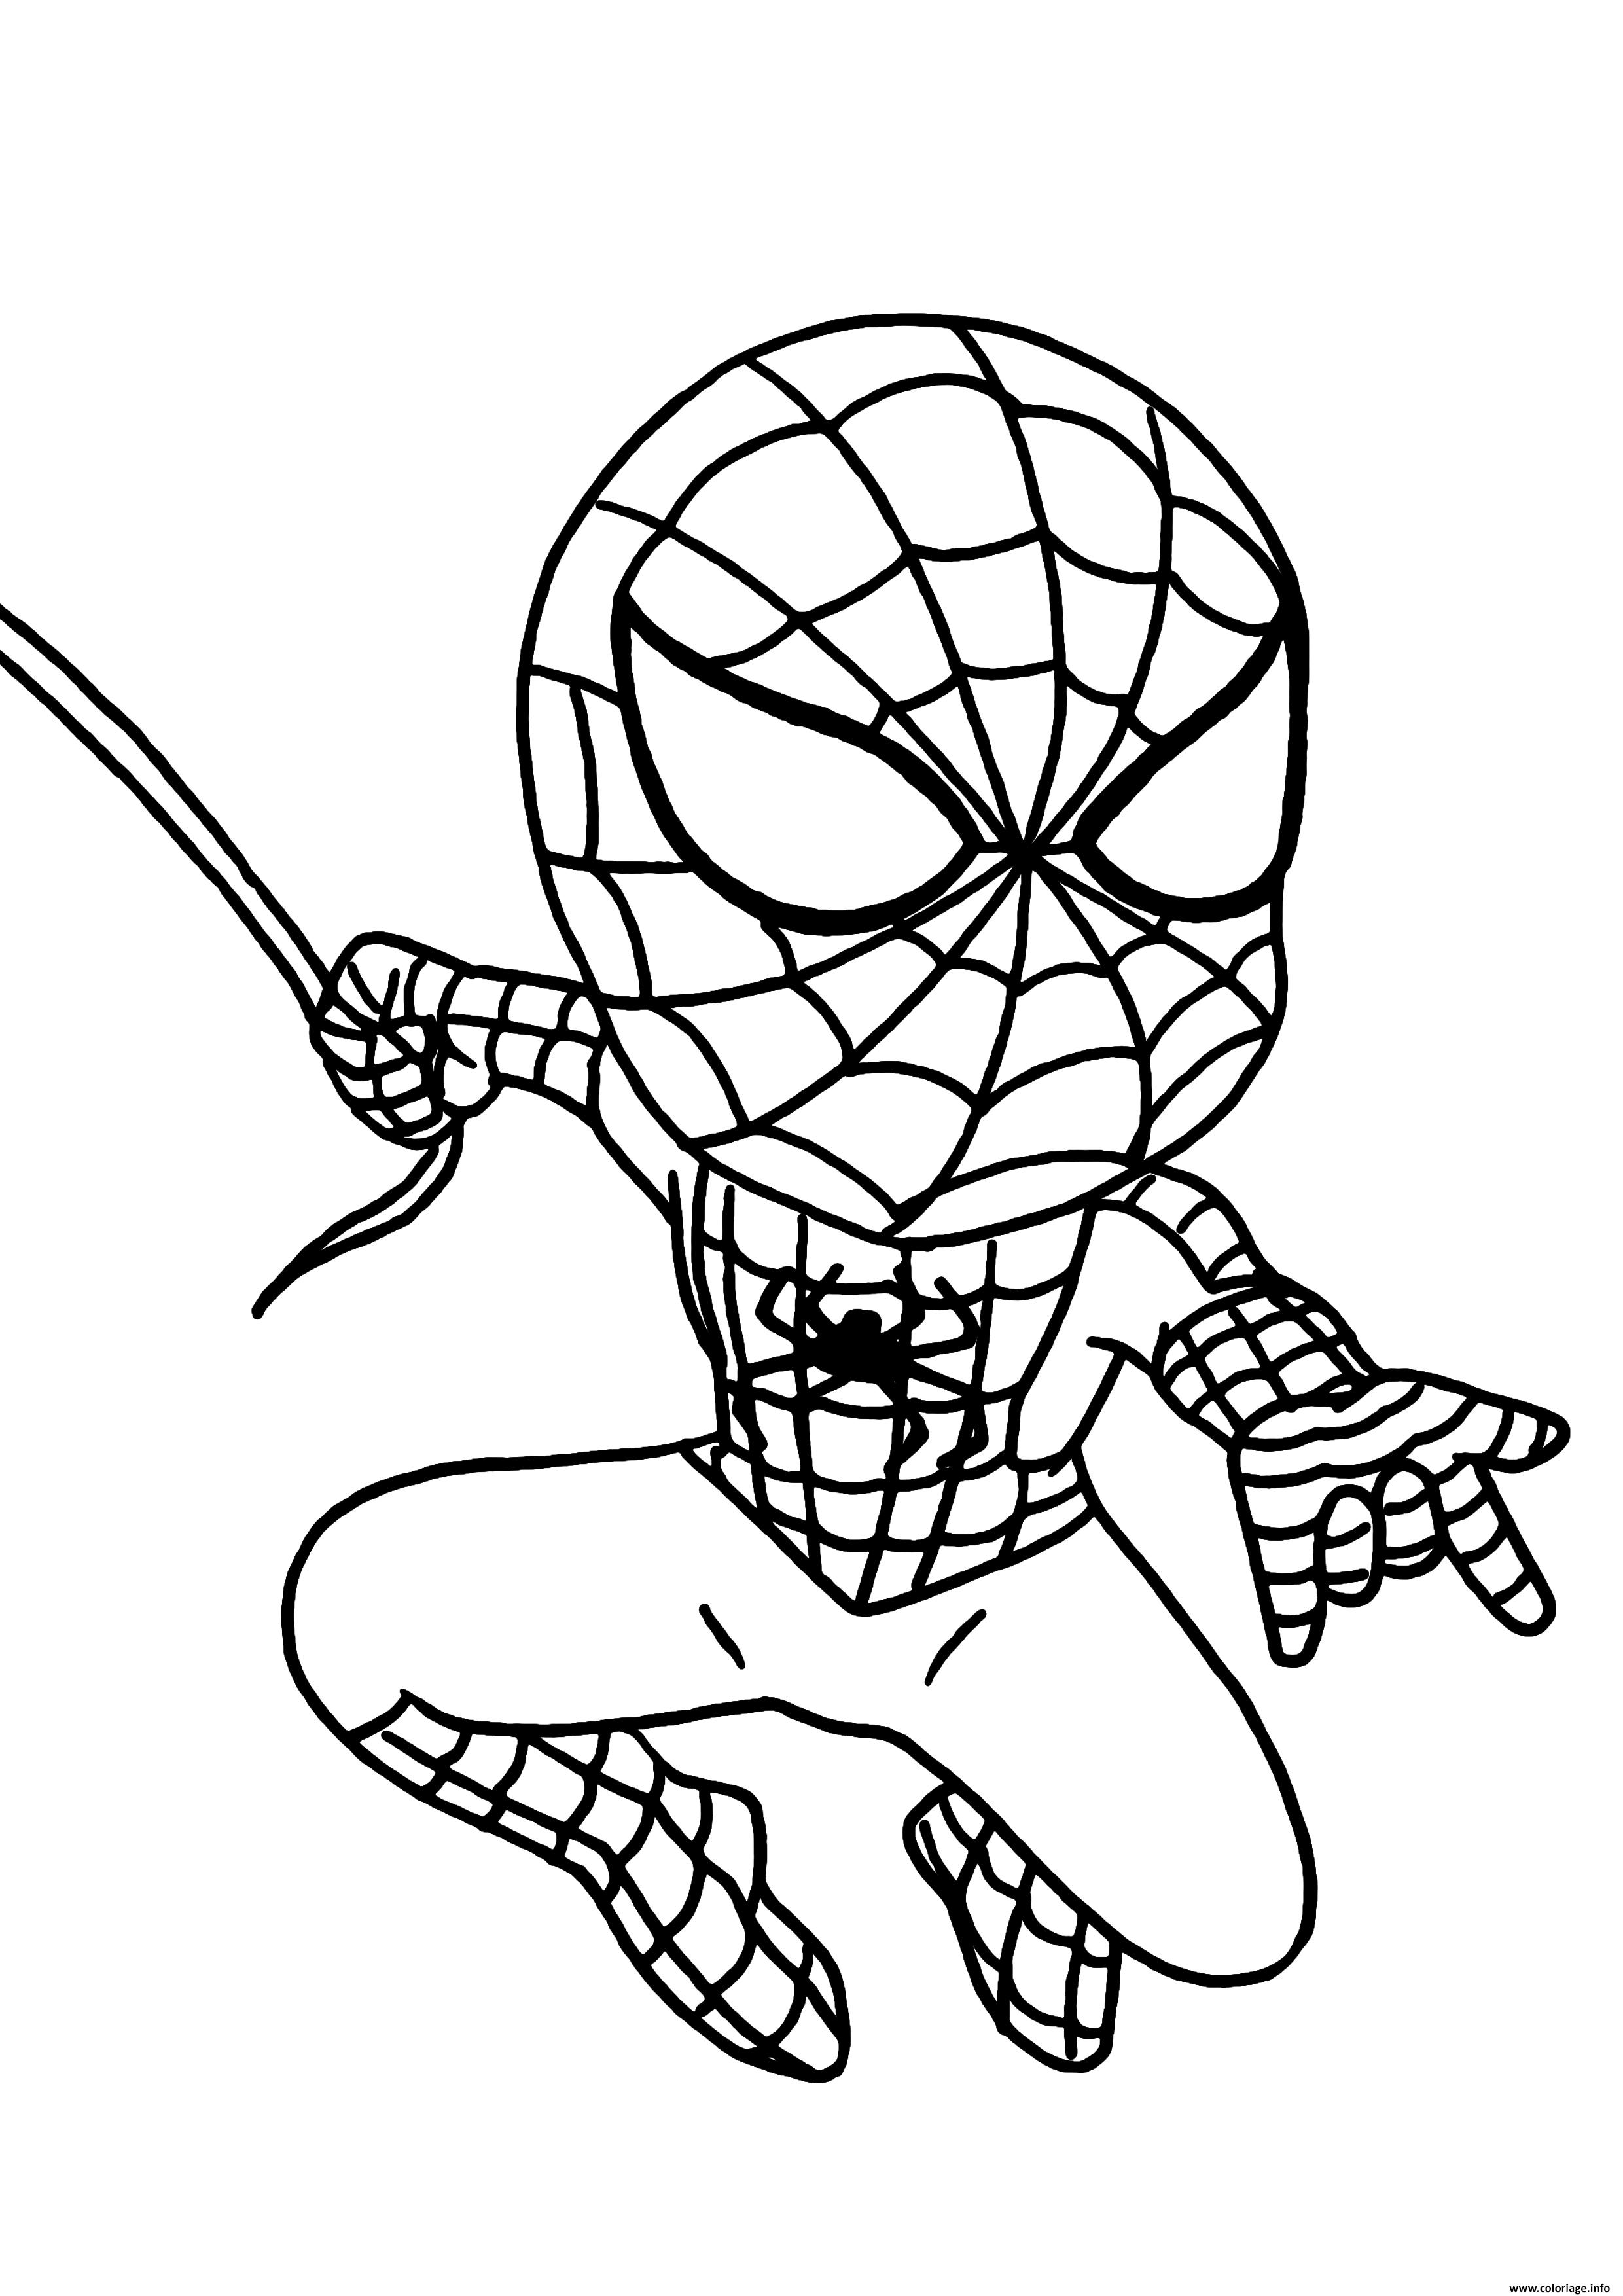 Dessin mini spiderman Coloriage Gratuit à Imprimer